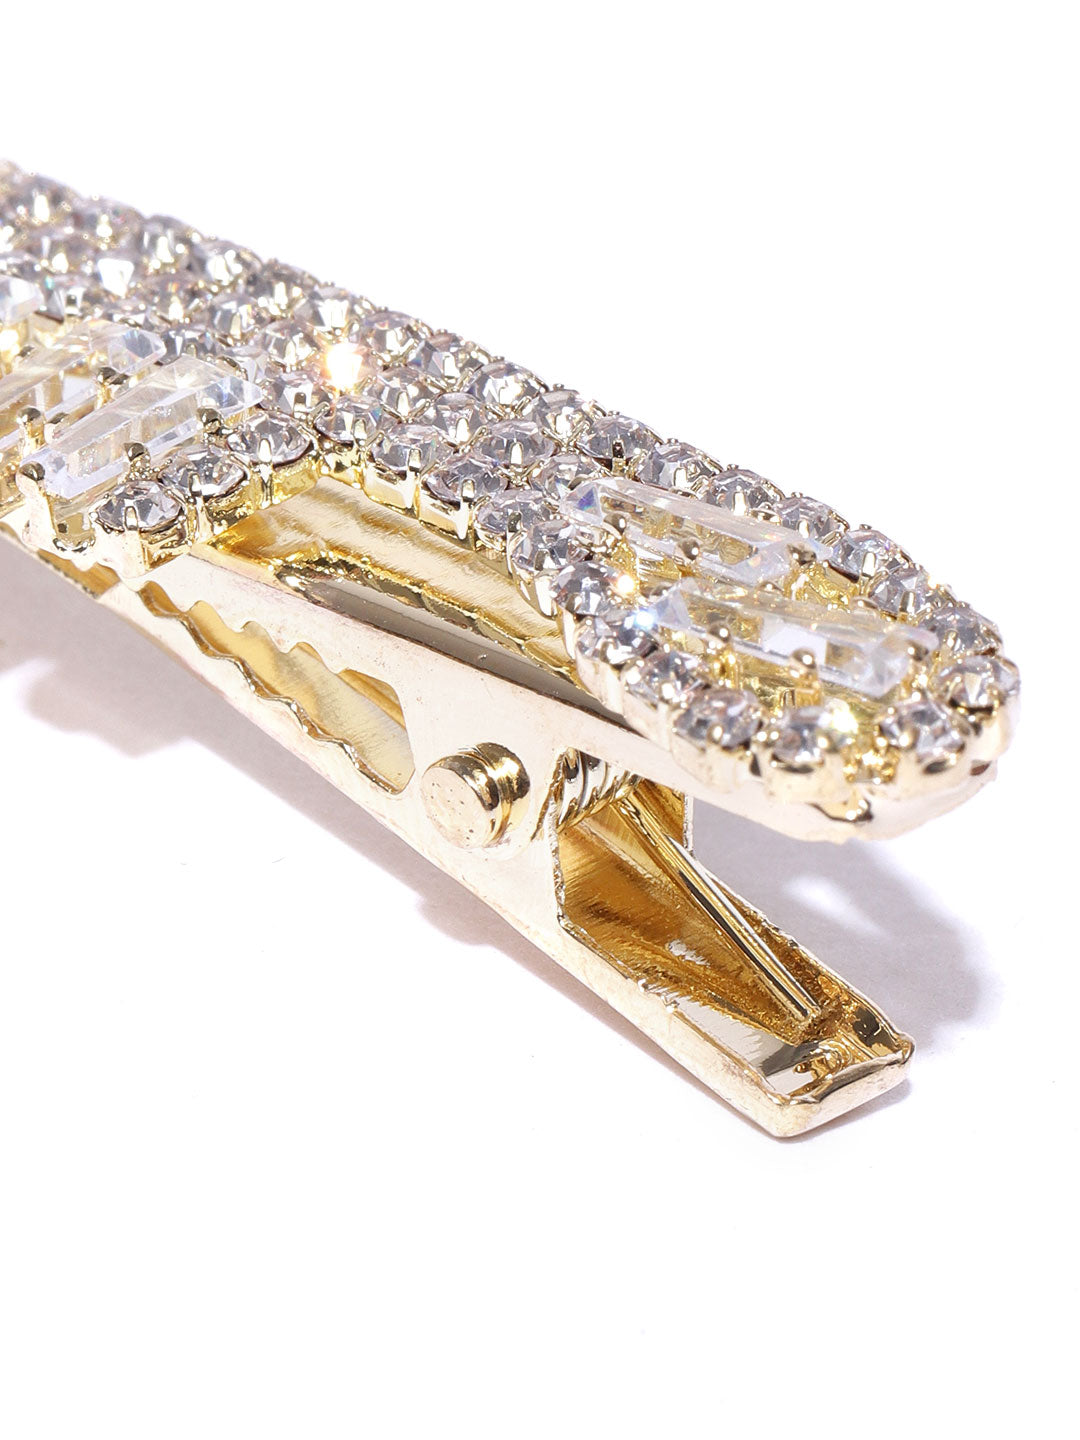 Blueberry gold crystal stone embellished comb shape alligator hair clip